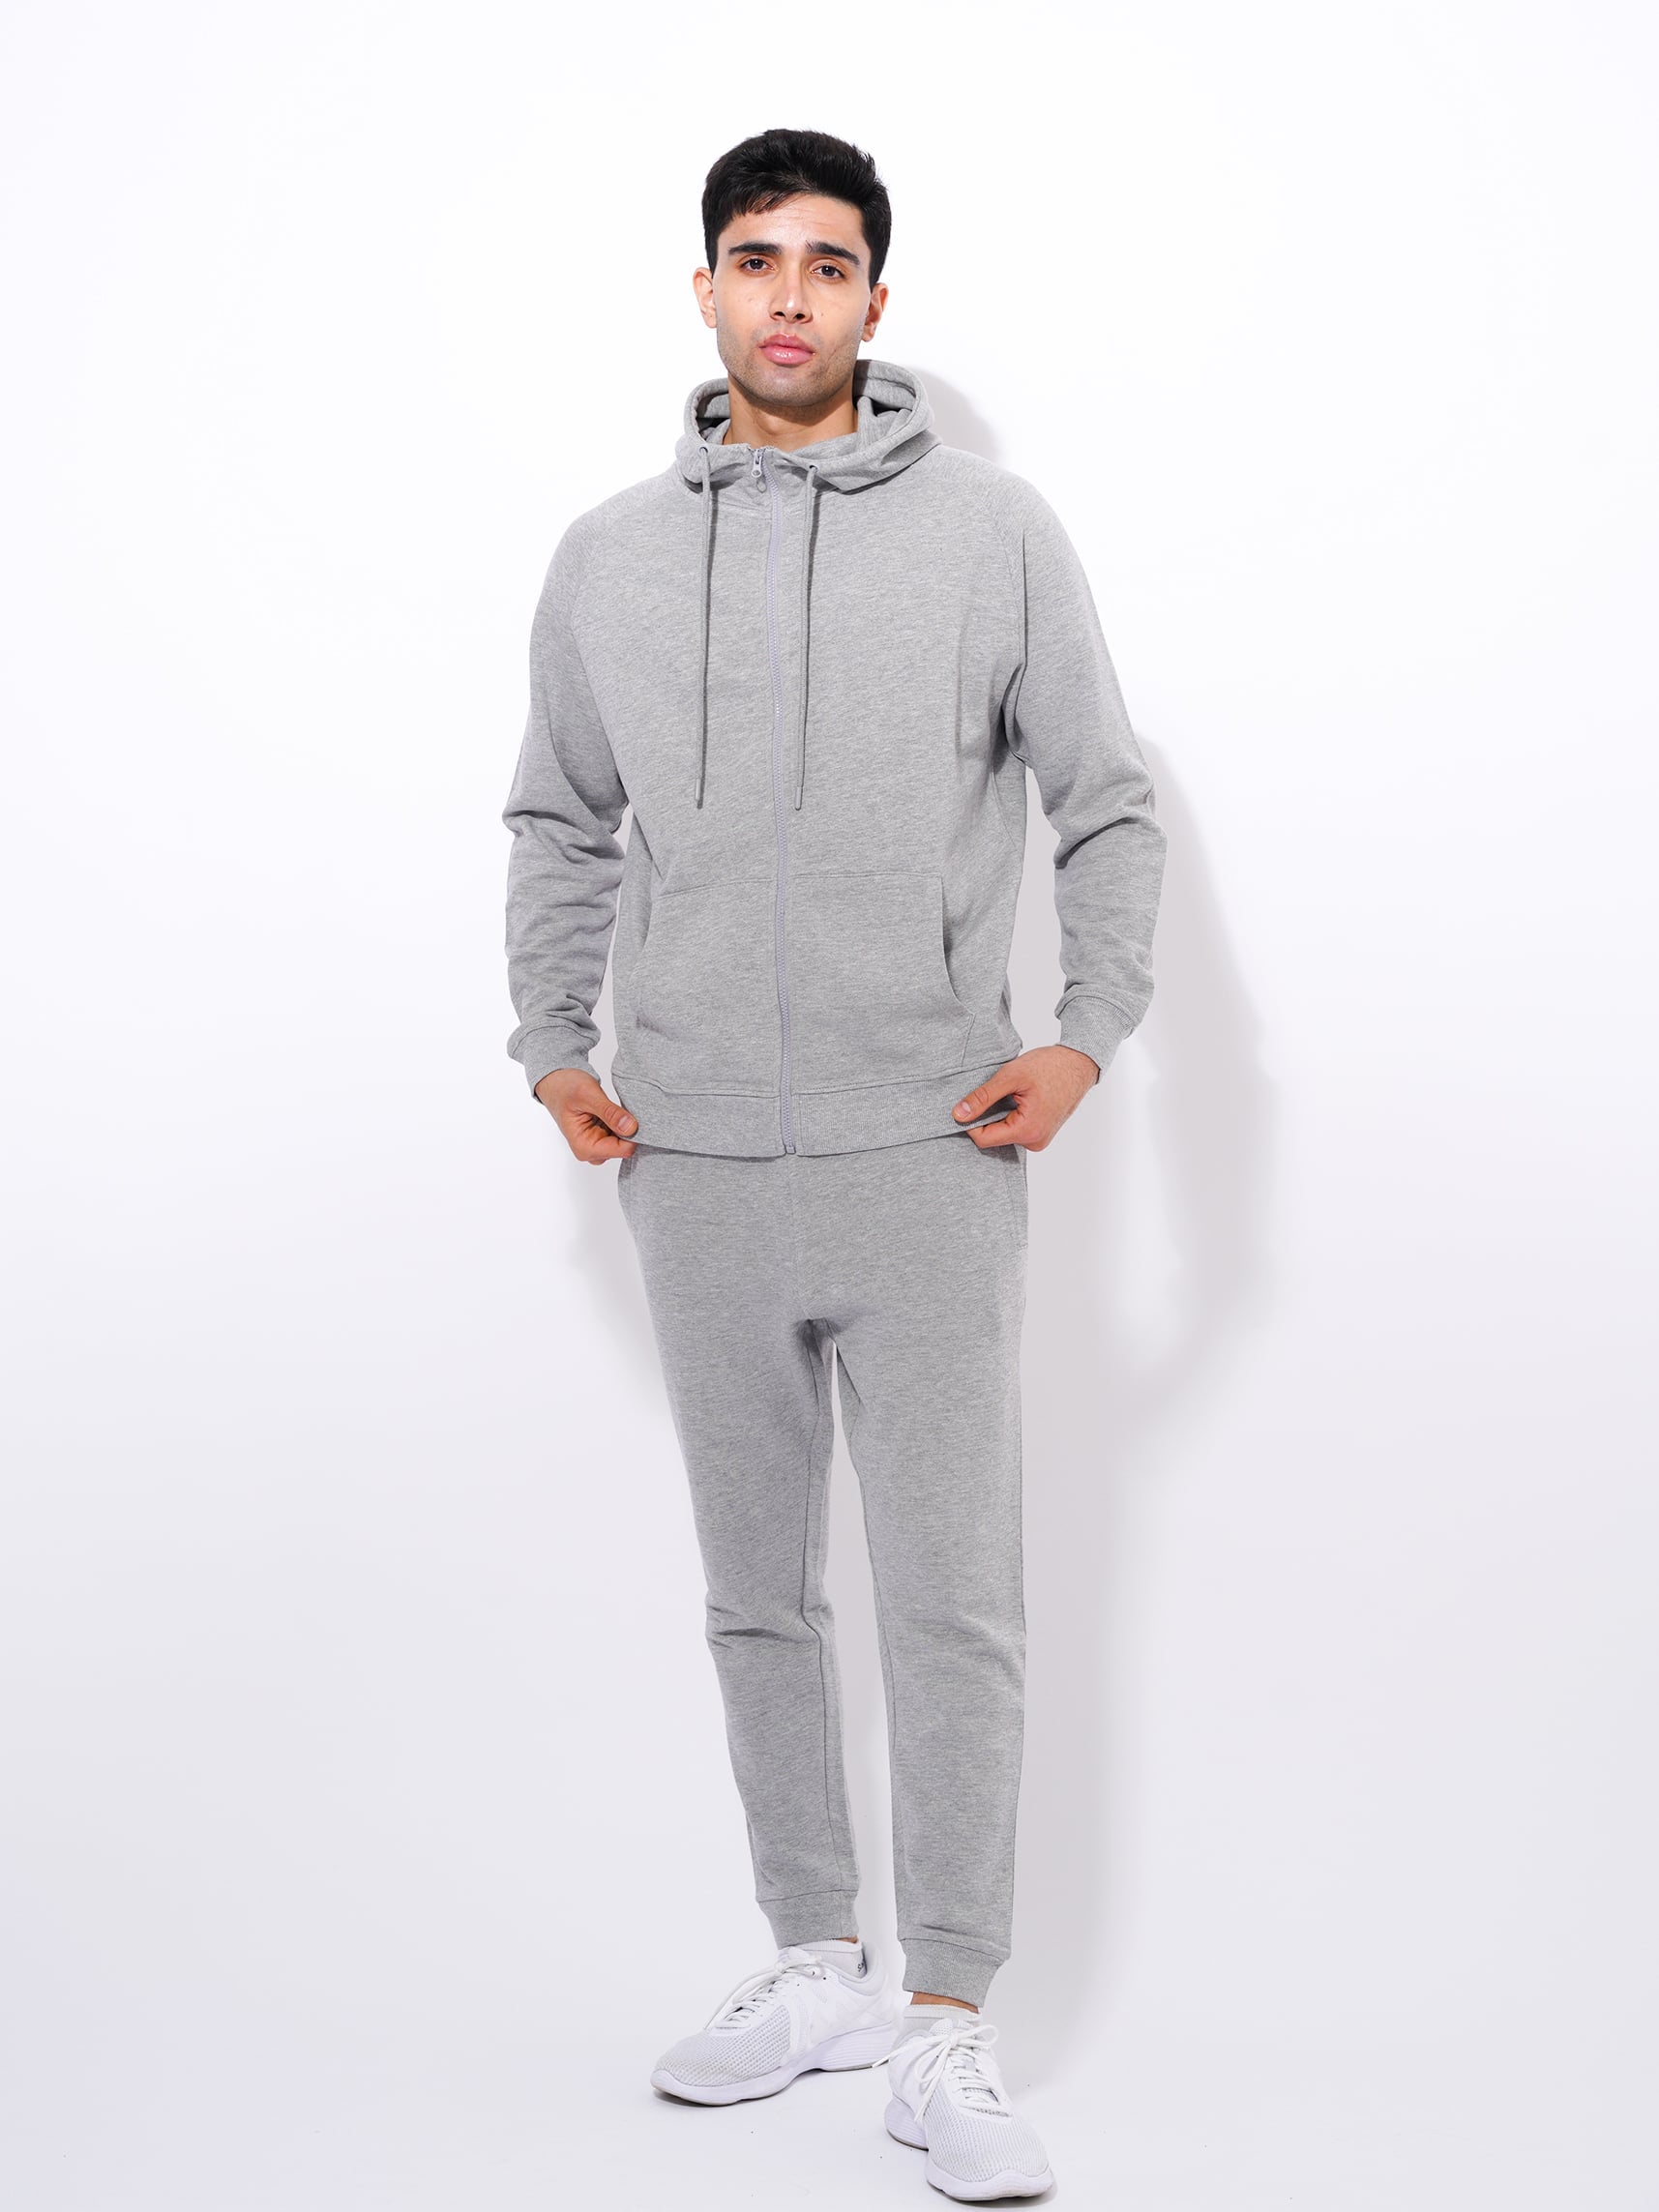 Men’s Winter Premium Cotton pocket Hoodie Grey Melange Color - inteblu